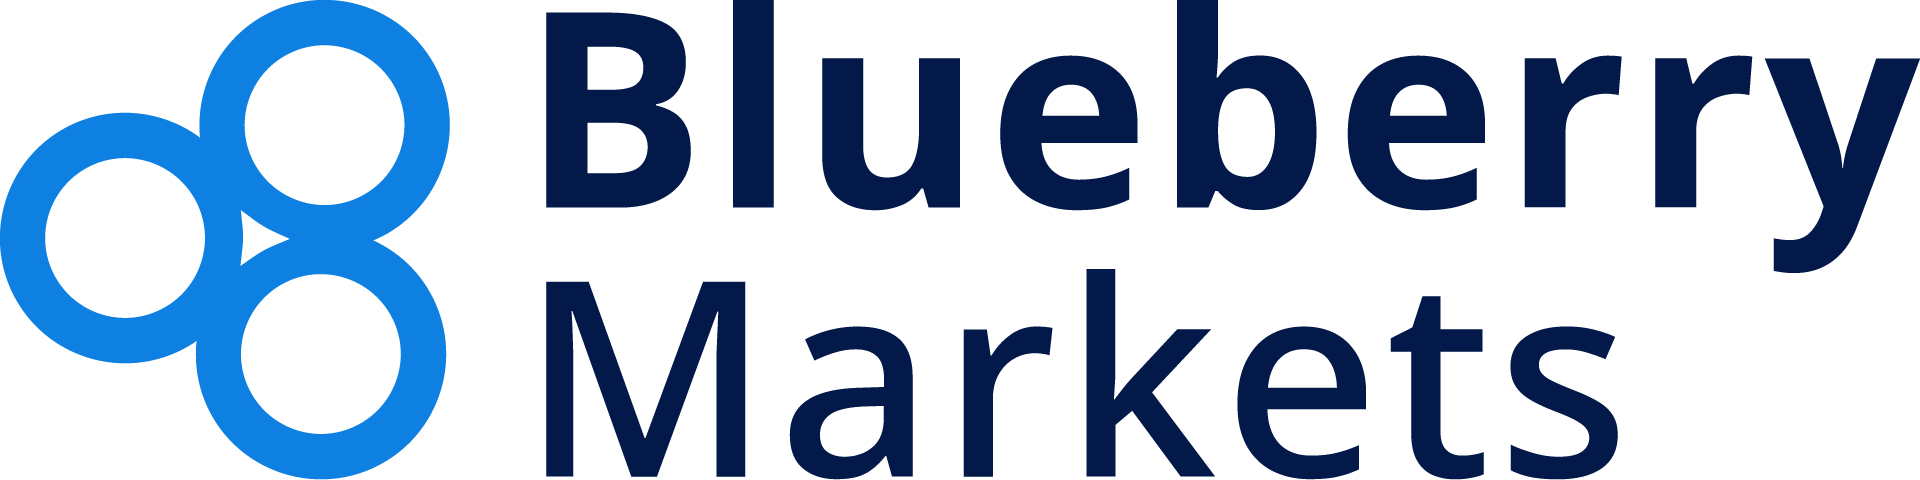 blueberry-markets-logo-stacked-01